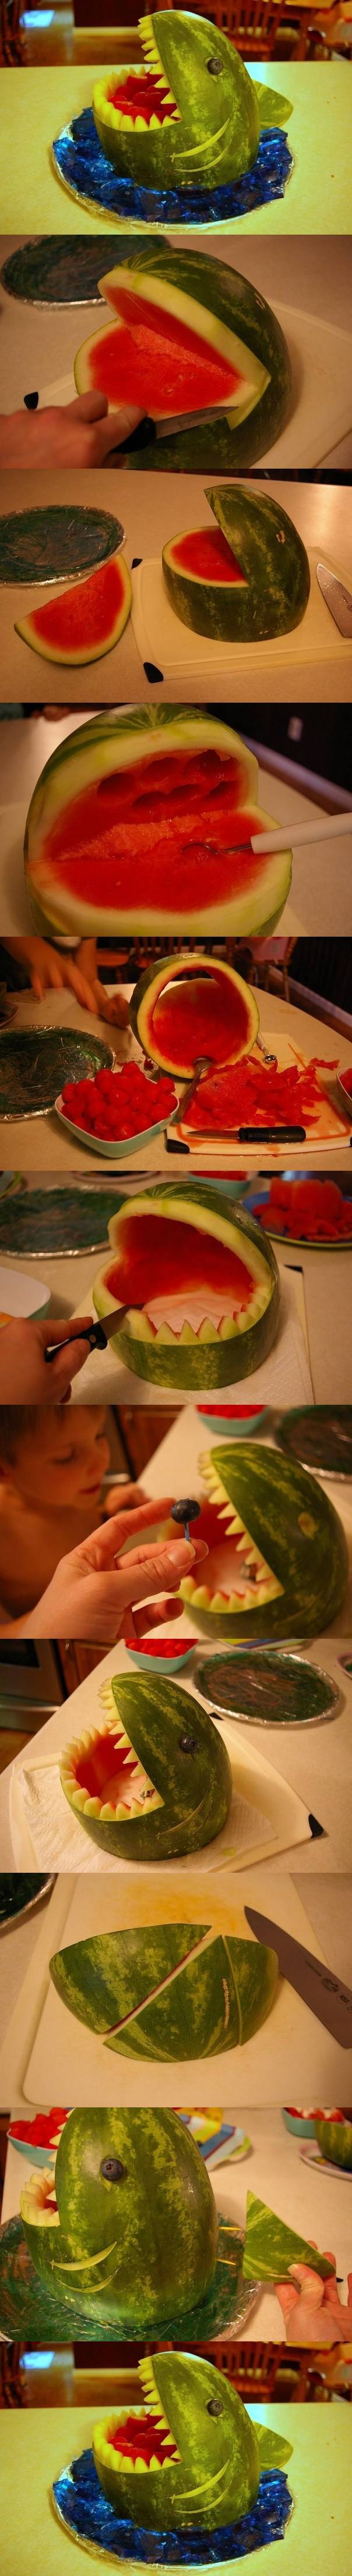 Food Art DIY - Watermelon Shark 2